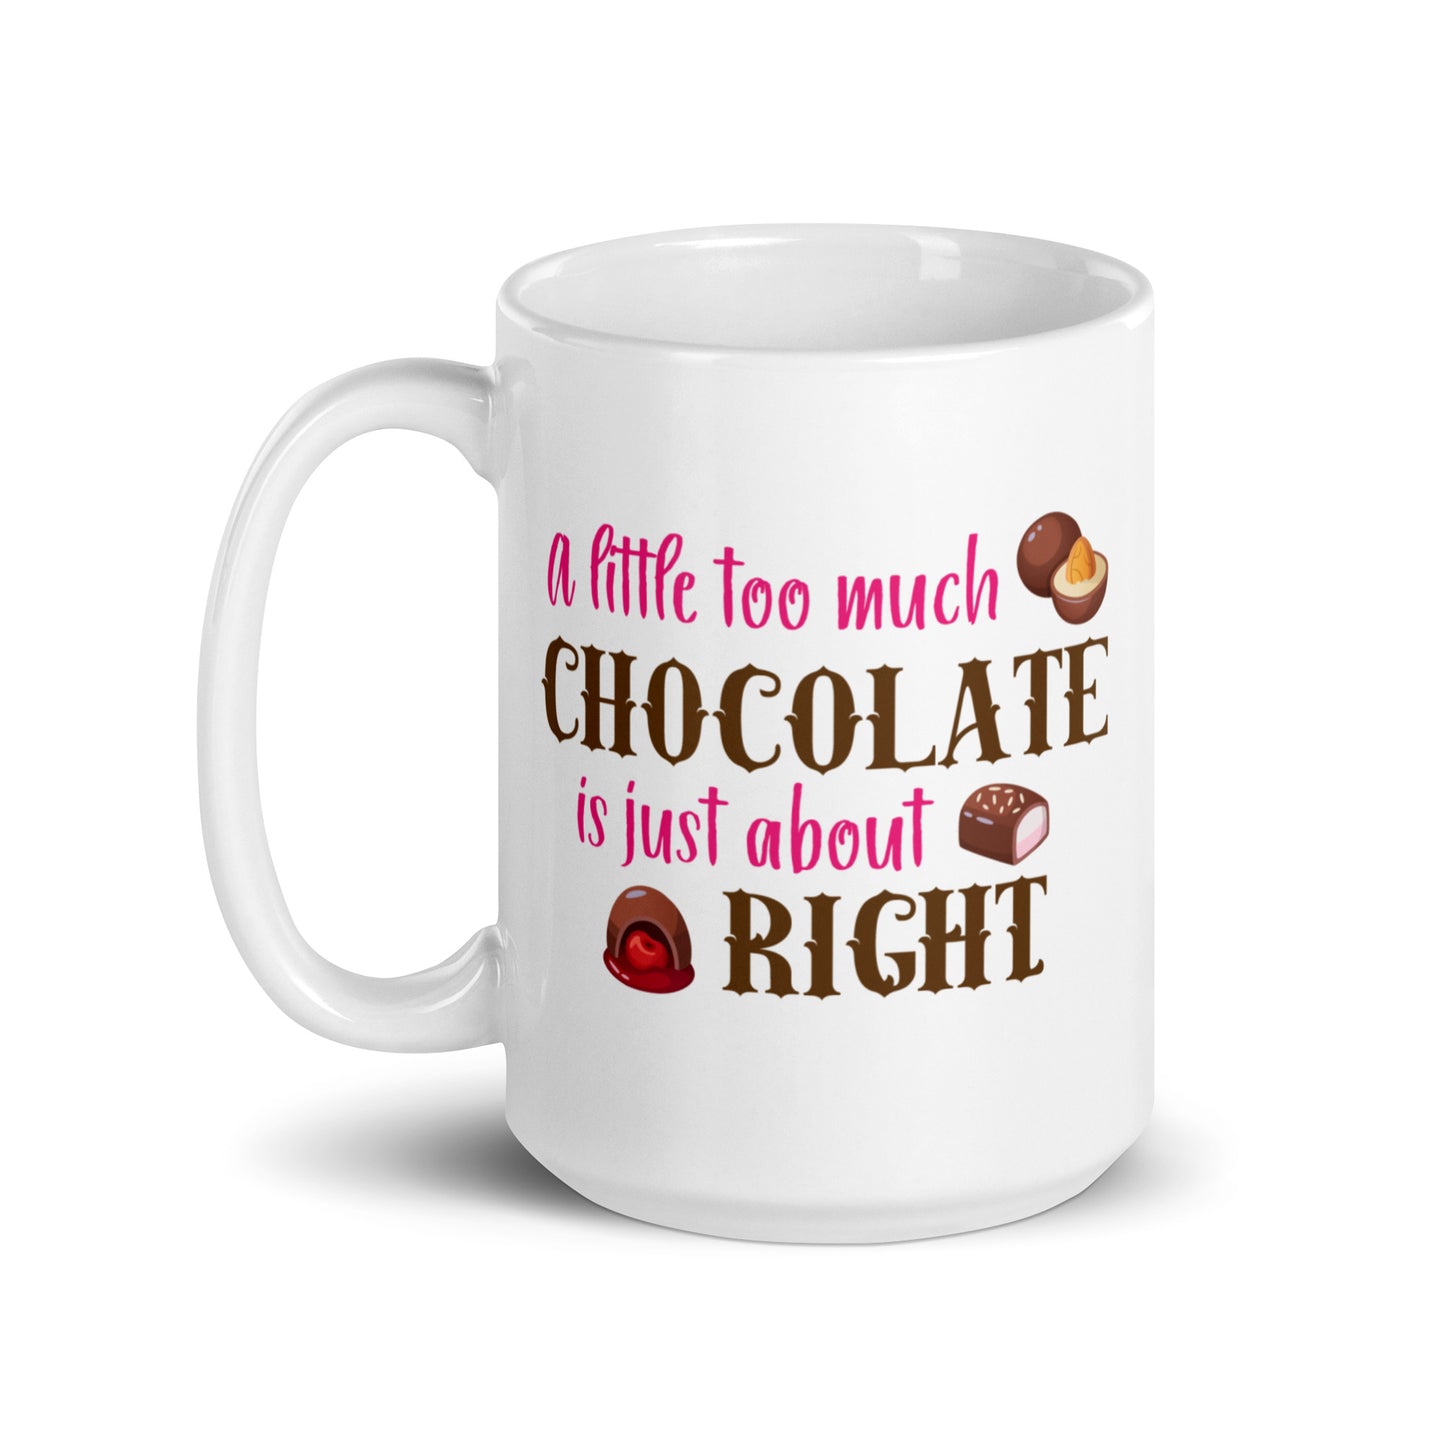 Too Much Chocolate mug